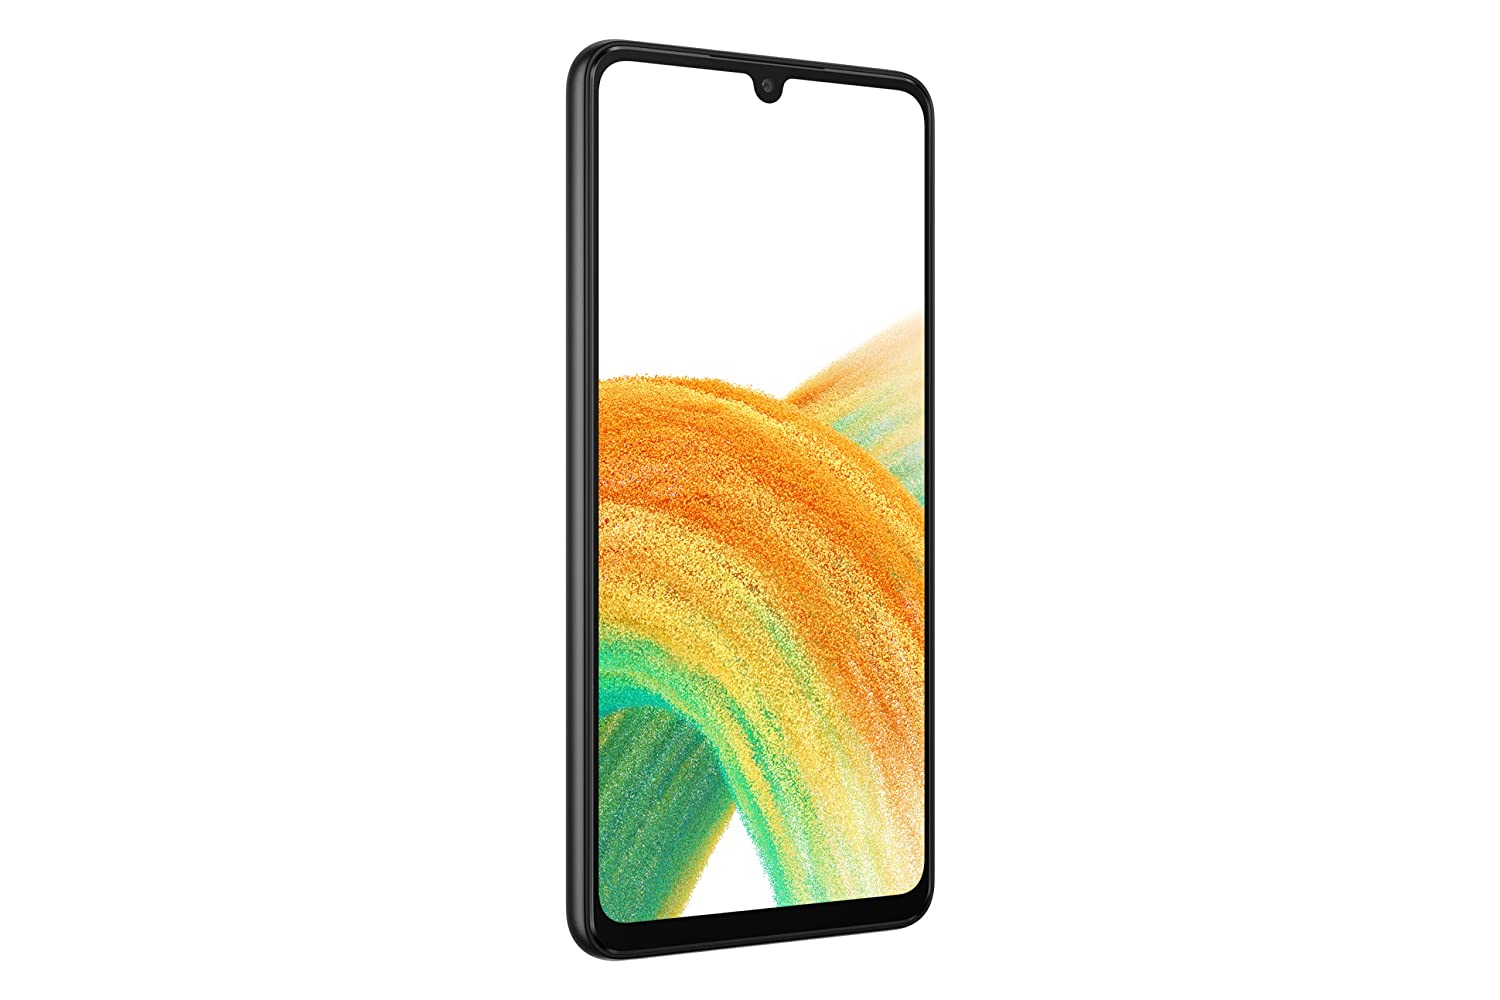 Samsung Galaxy A33 5G (Awesome Black, 8GB, 128GB Storage) | 48 MP No Shake Cam | Upto 16 GB RAM - Mahajan Electronics Online